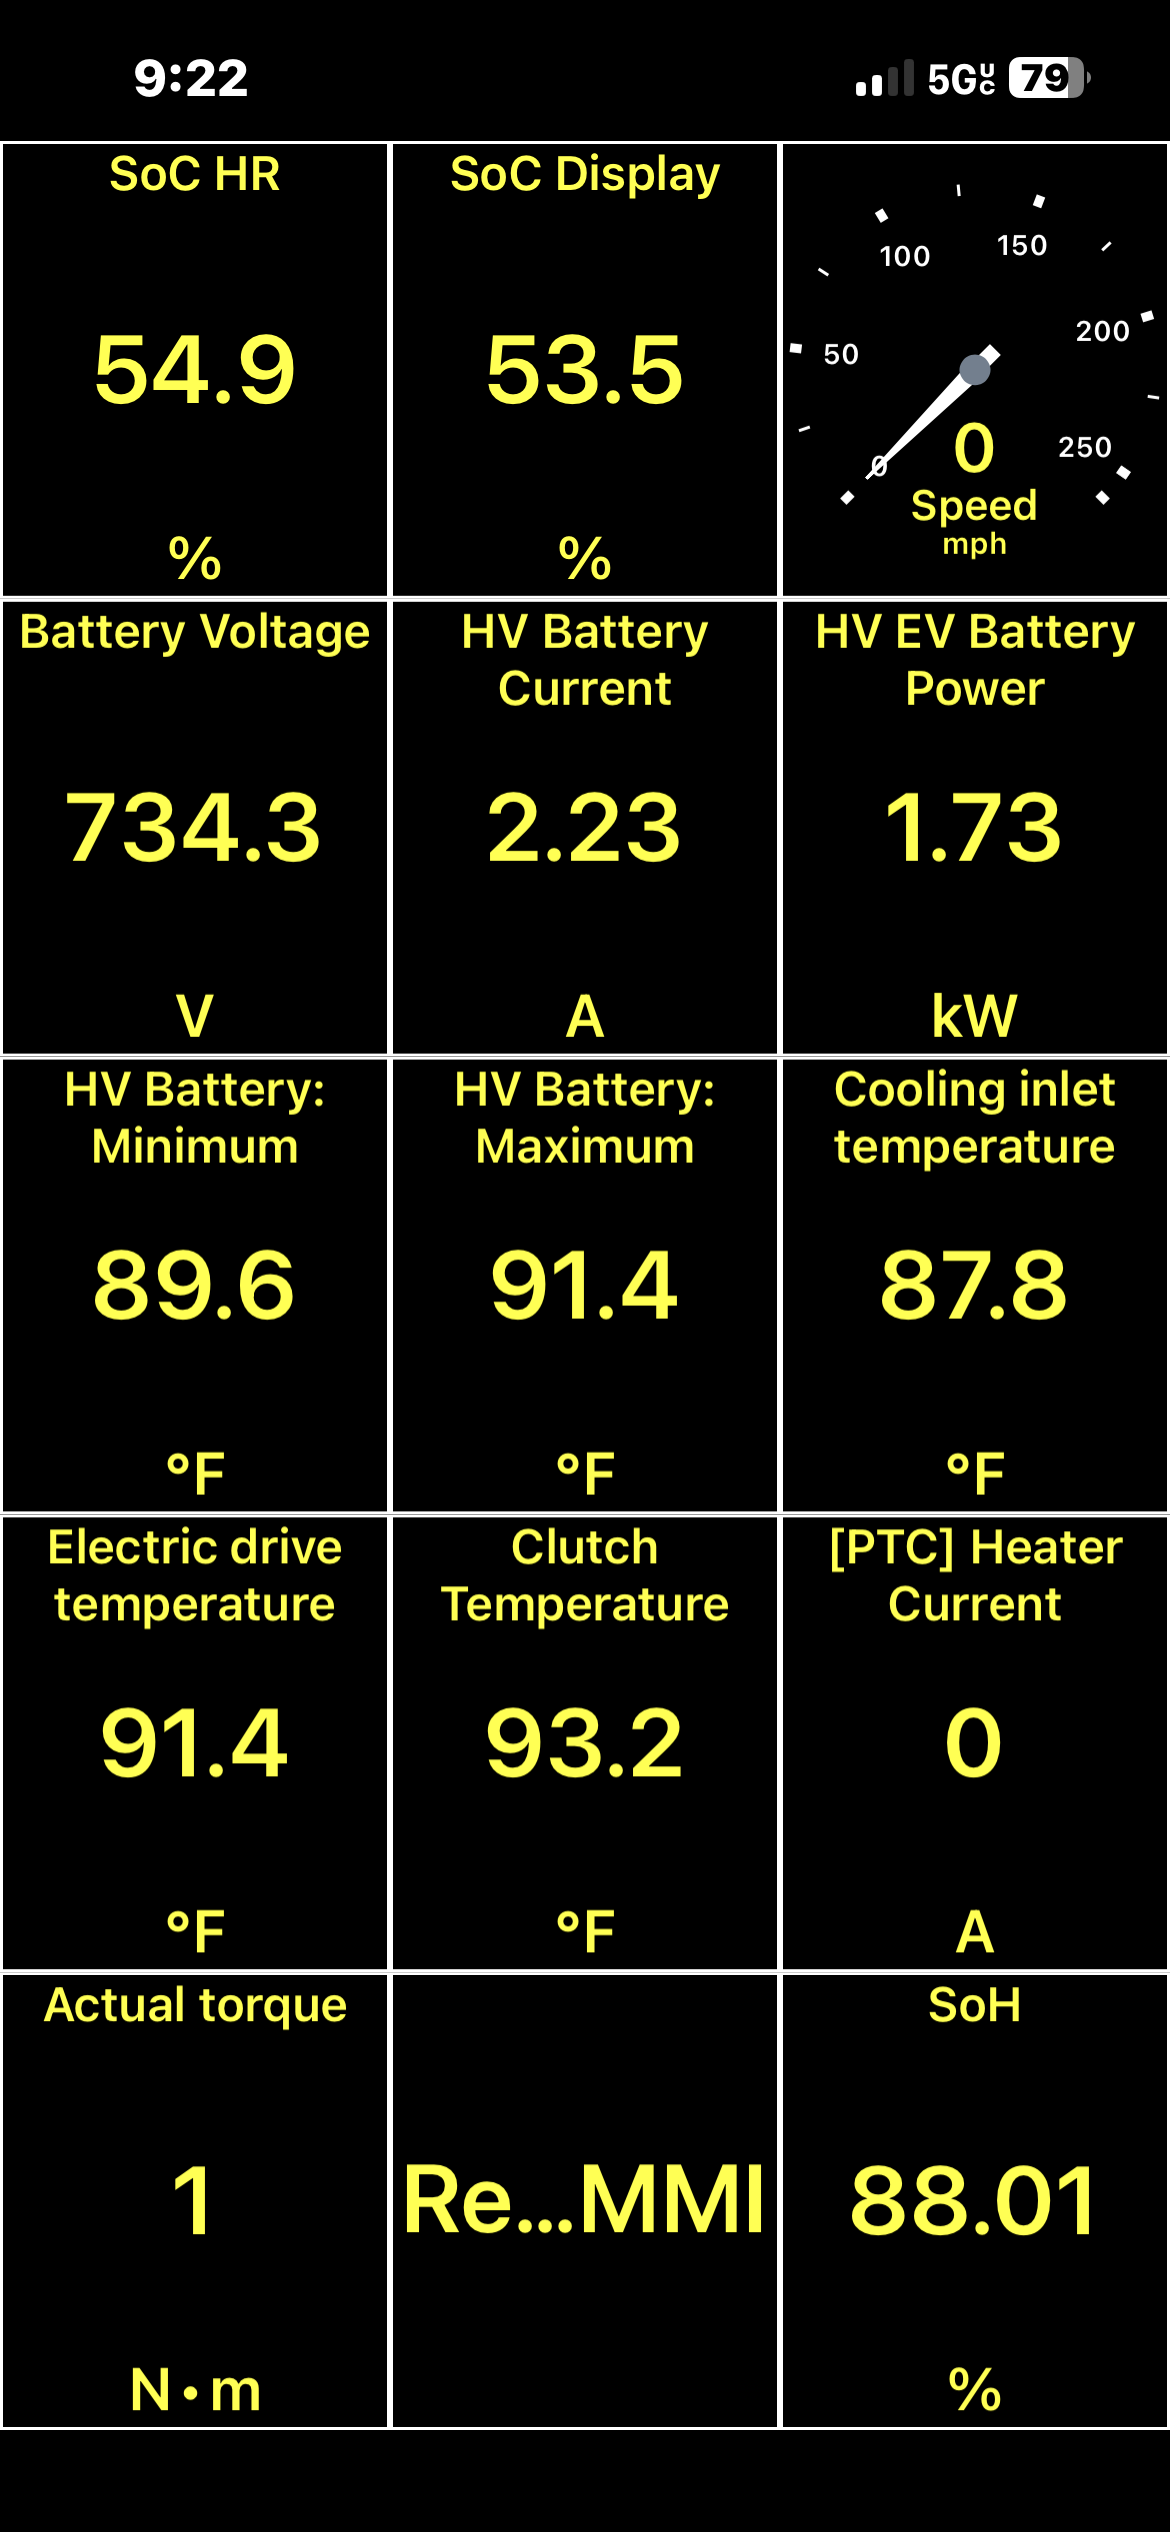 Porsche Taycan Baseline for HV Battery SoH Performance IMG_2420.PNG